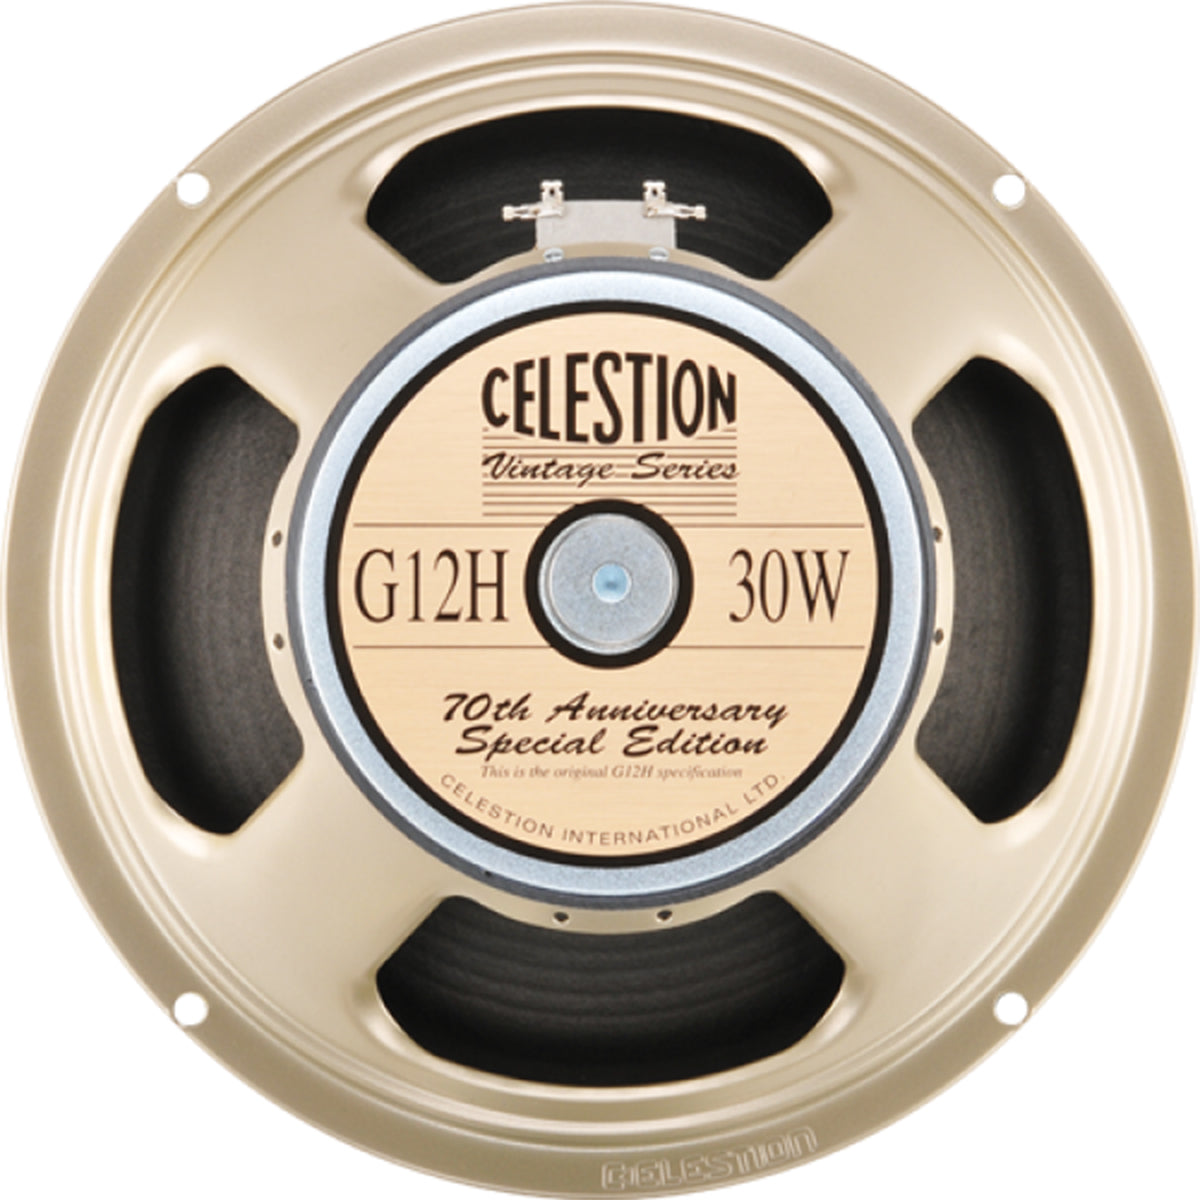 Celestion T4533 Classic Series G12H Anniversary Guitar Speaker 12 Inch 30W 8OHM